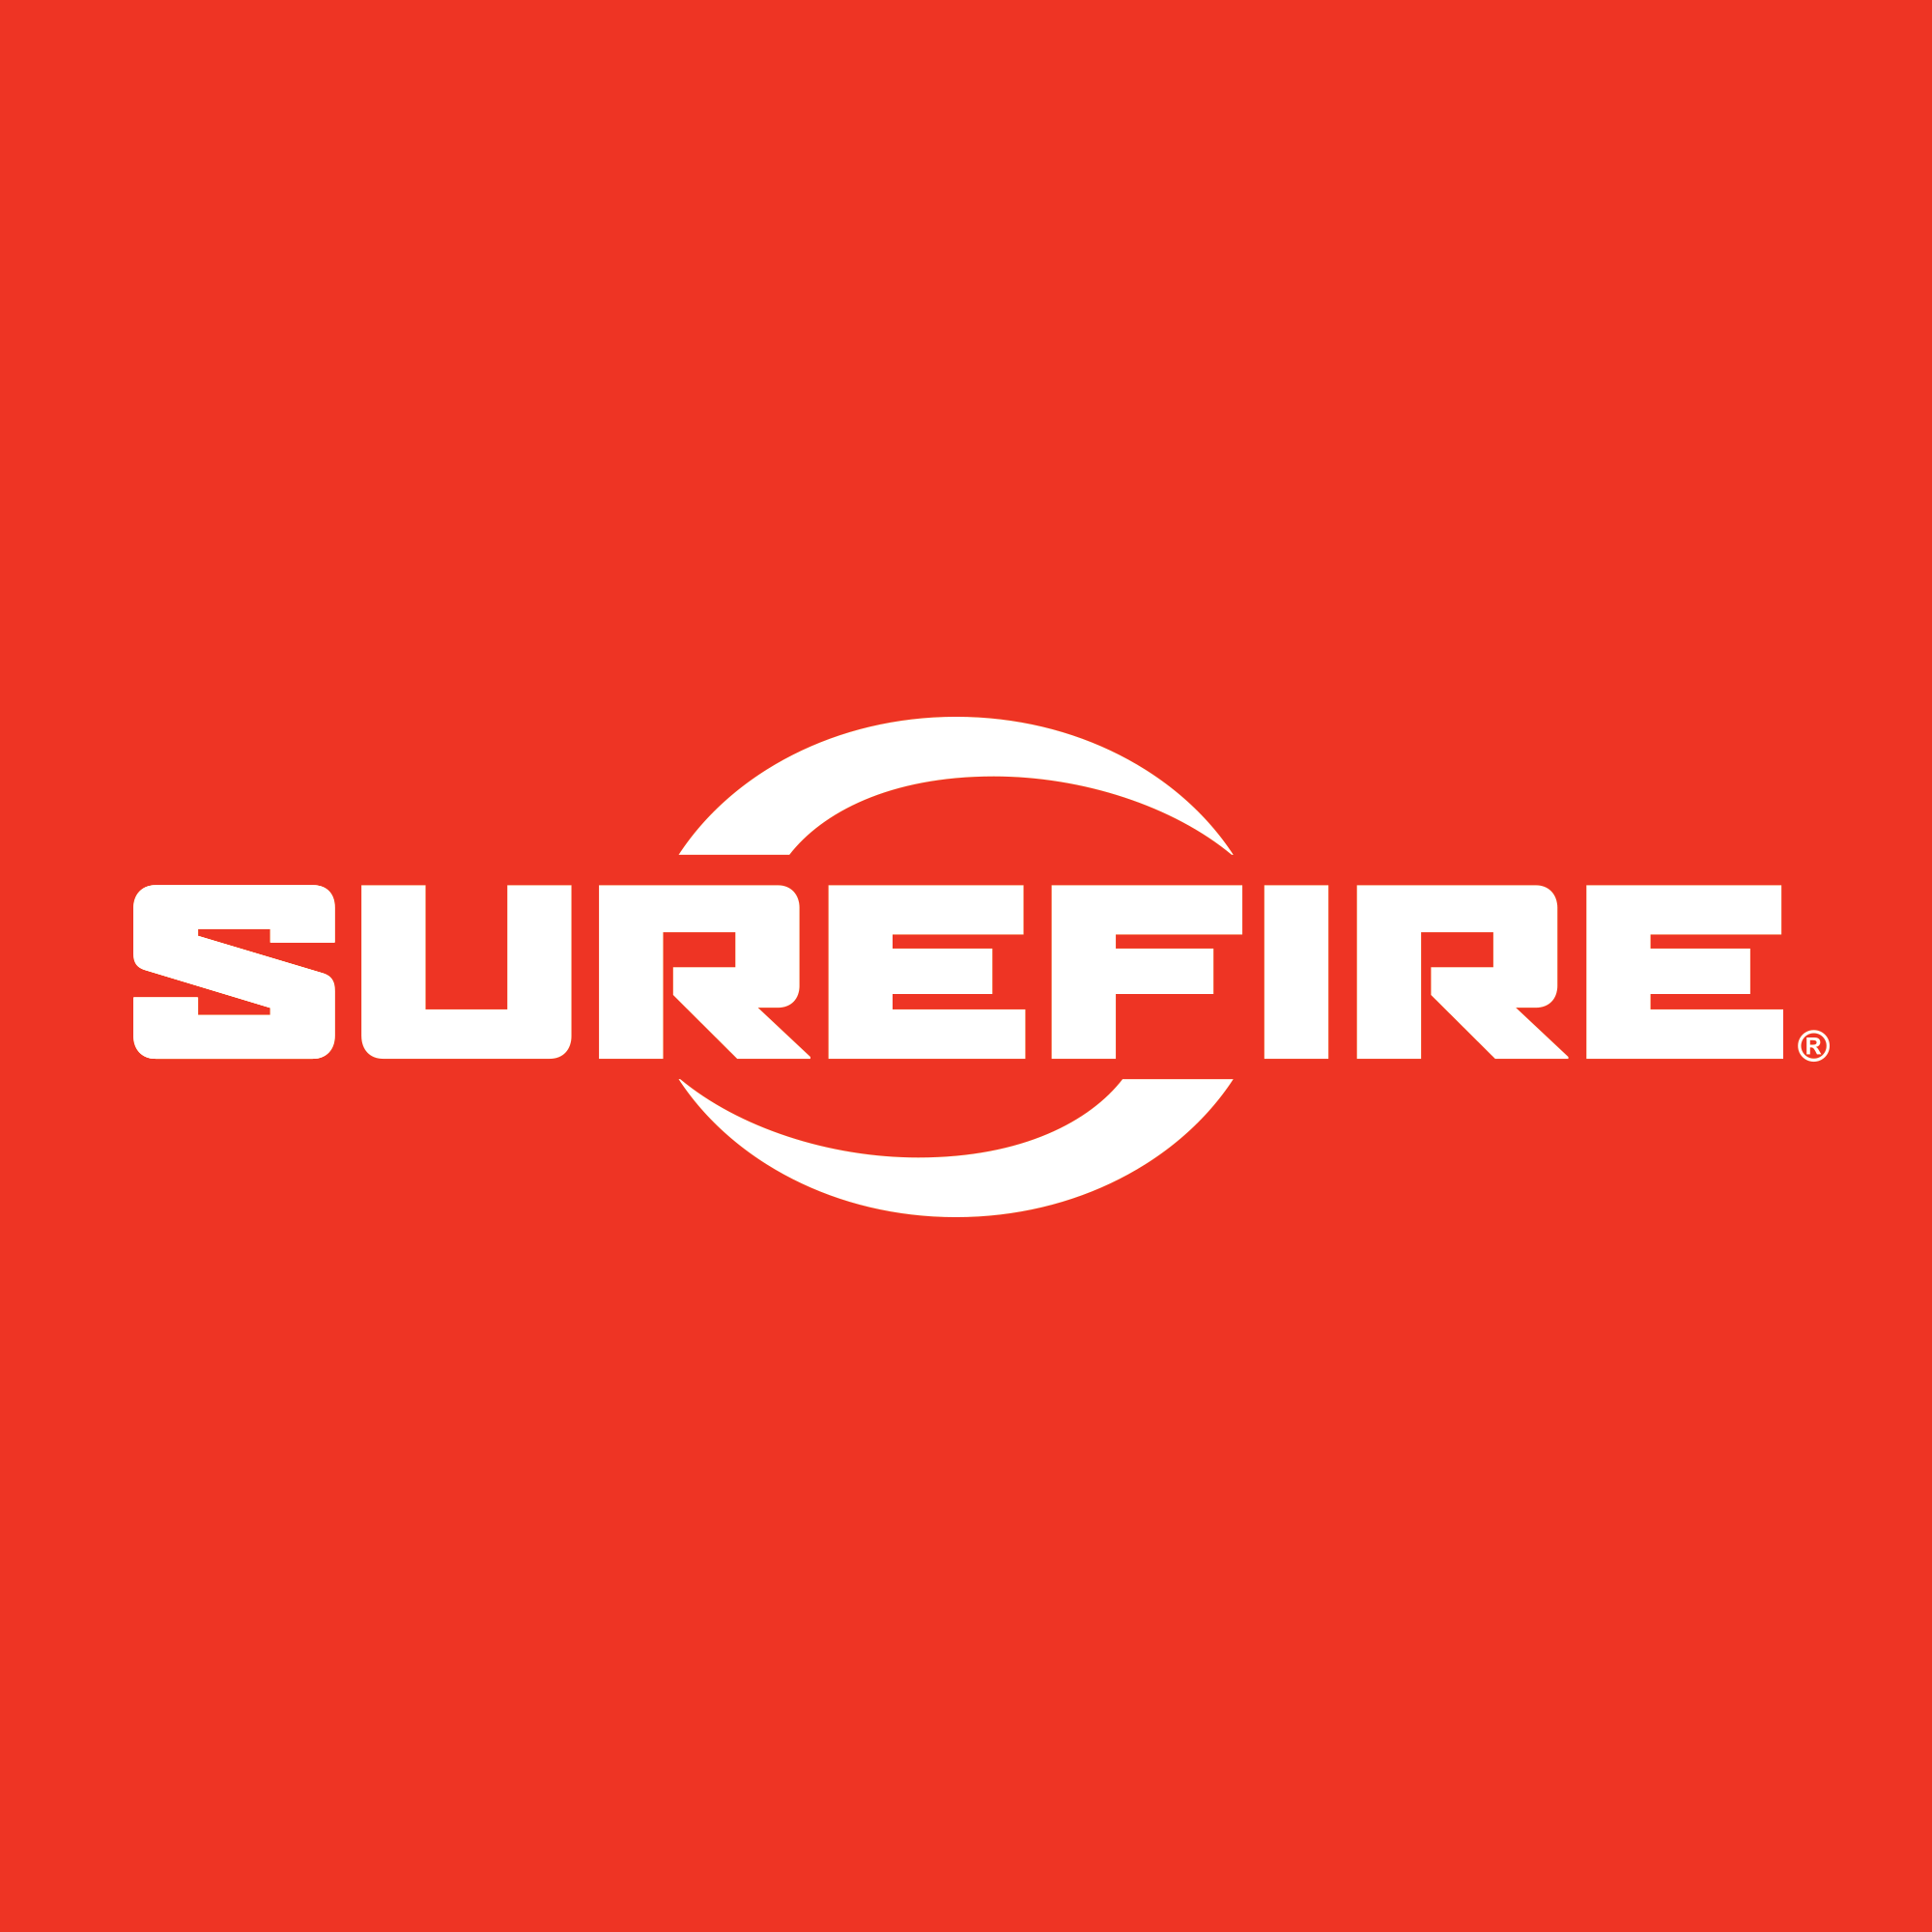 Surefire Logo - Amazon.com: Surefire